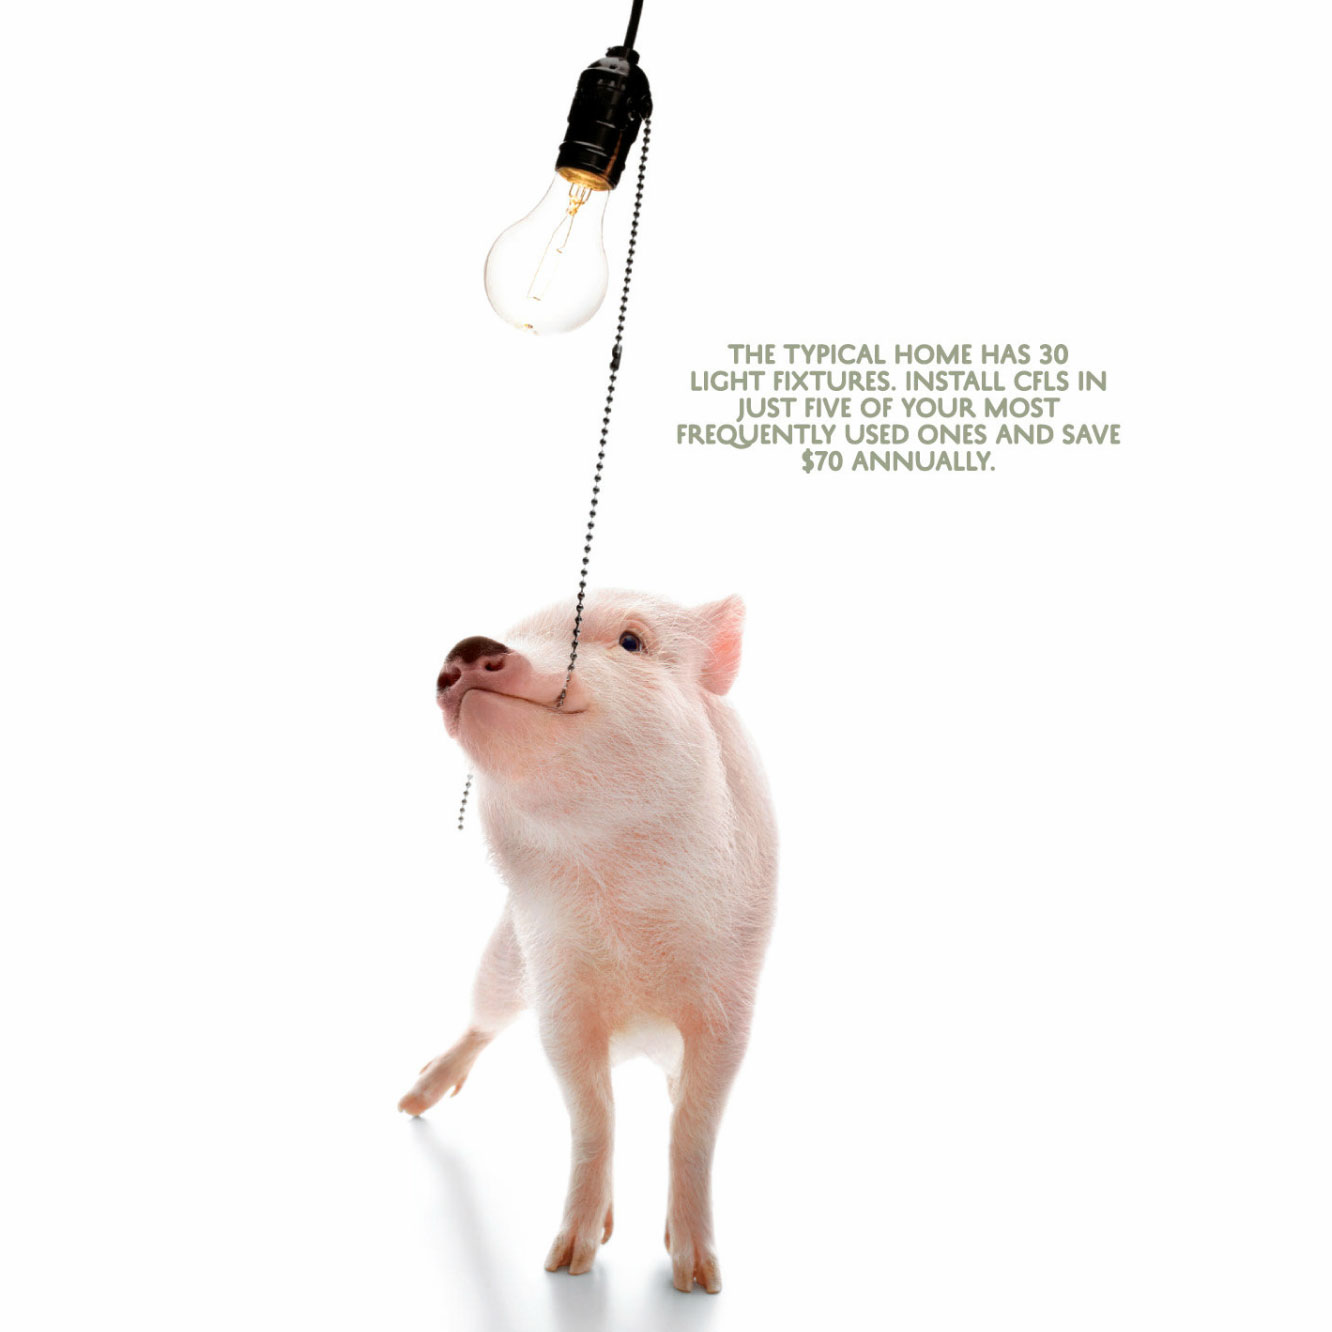 Farm Animals: Real Simple Magazine, White Pig, Piglet